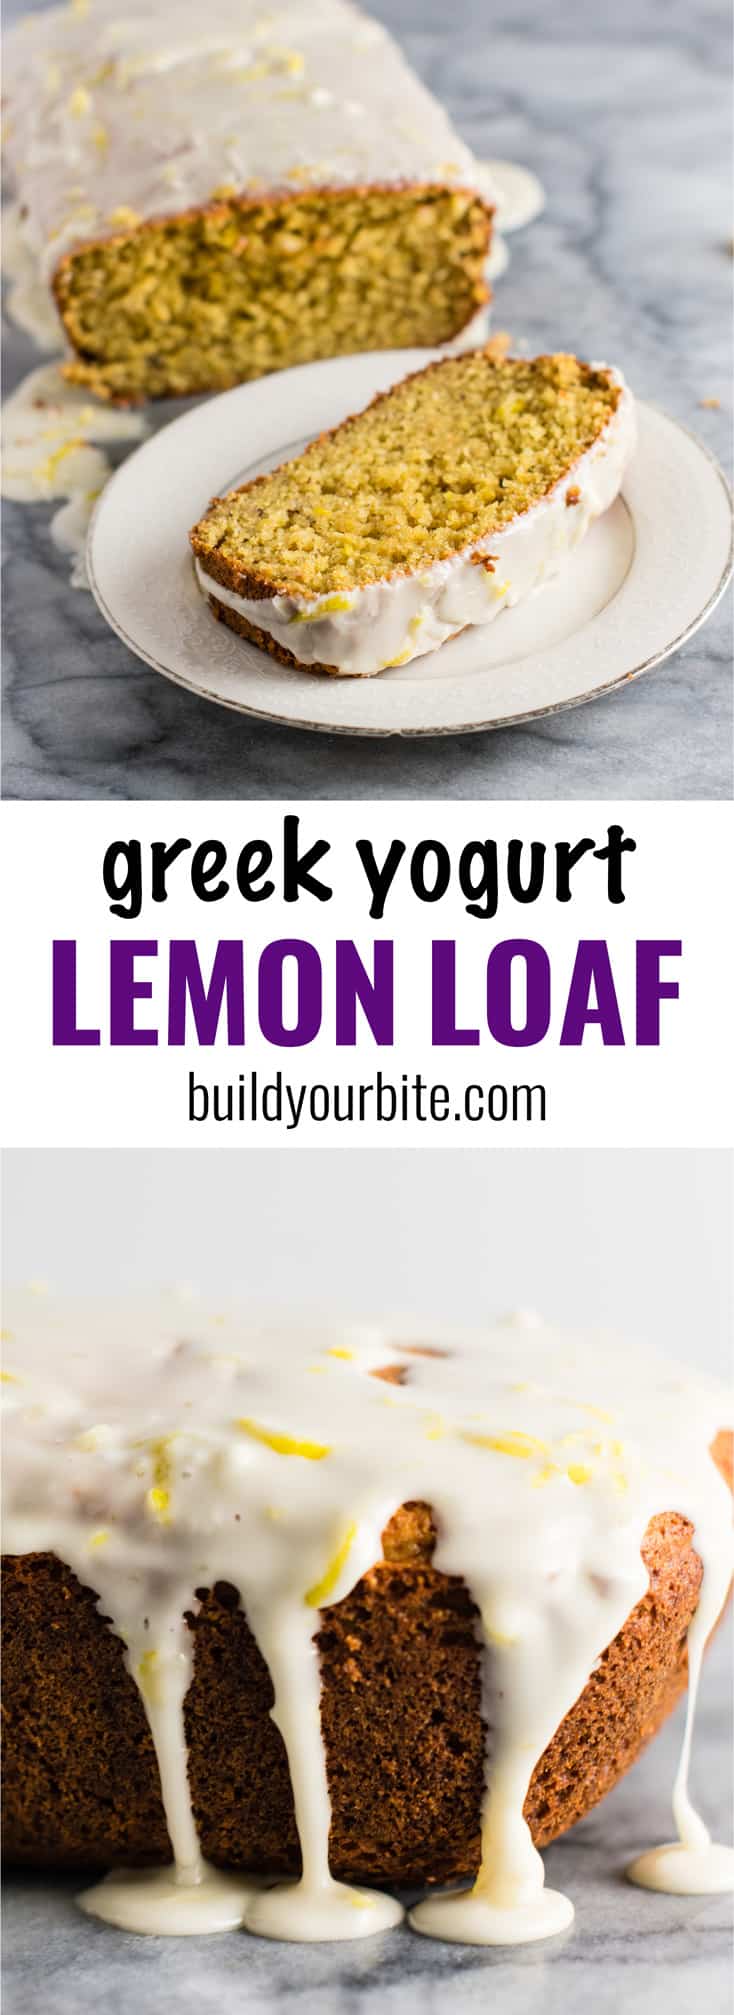 Mind blowing healthier greek yogurt lemon loaf! Made with healthier ingredients and melt in your mouth delicious #greekyogurtlemonloaf #lemonloaf #coconutoil #healthy #lemonbread